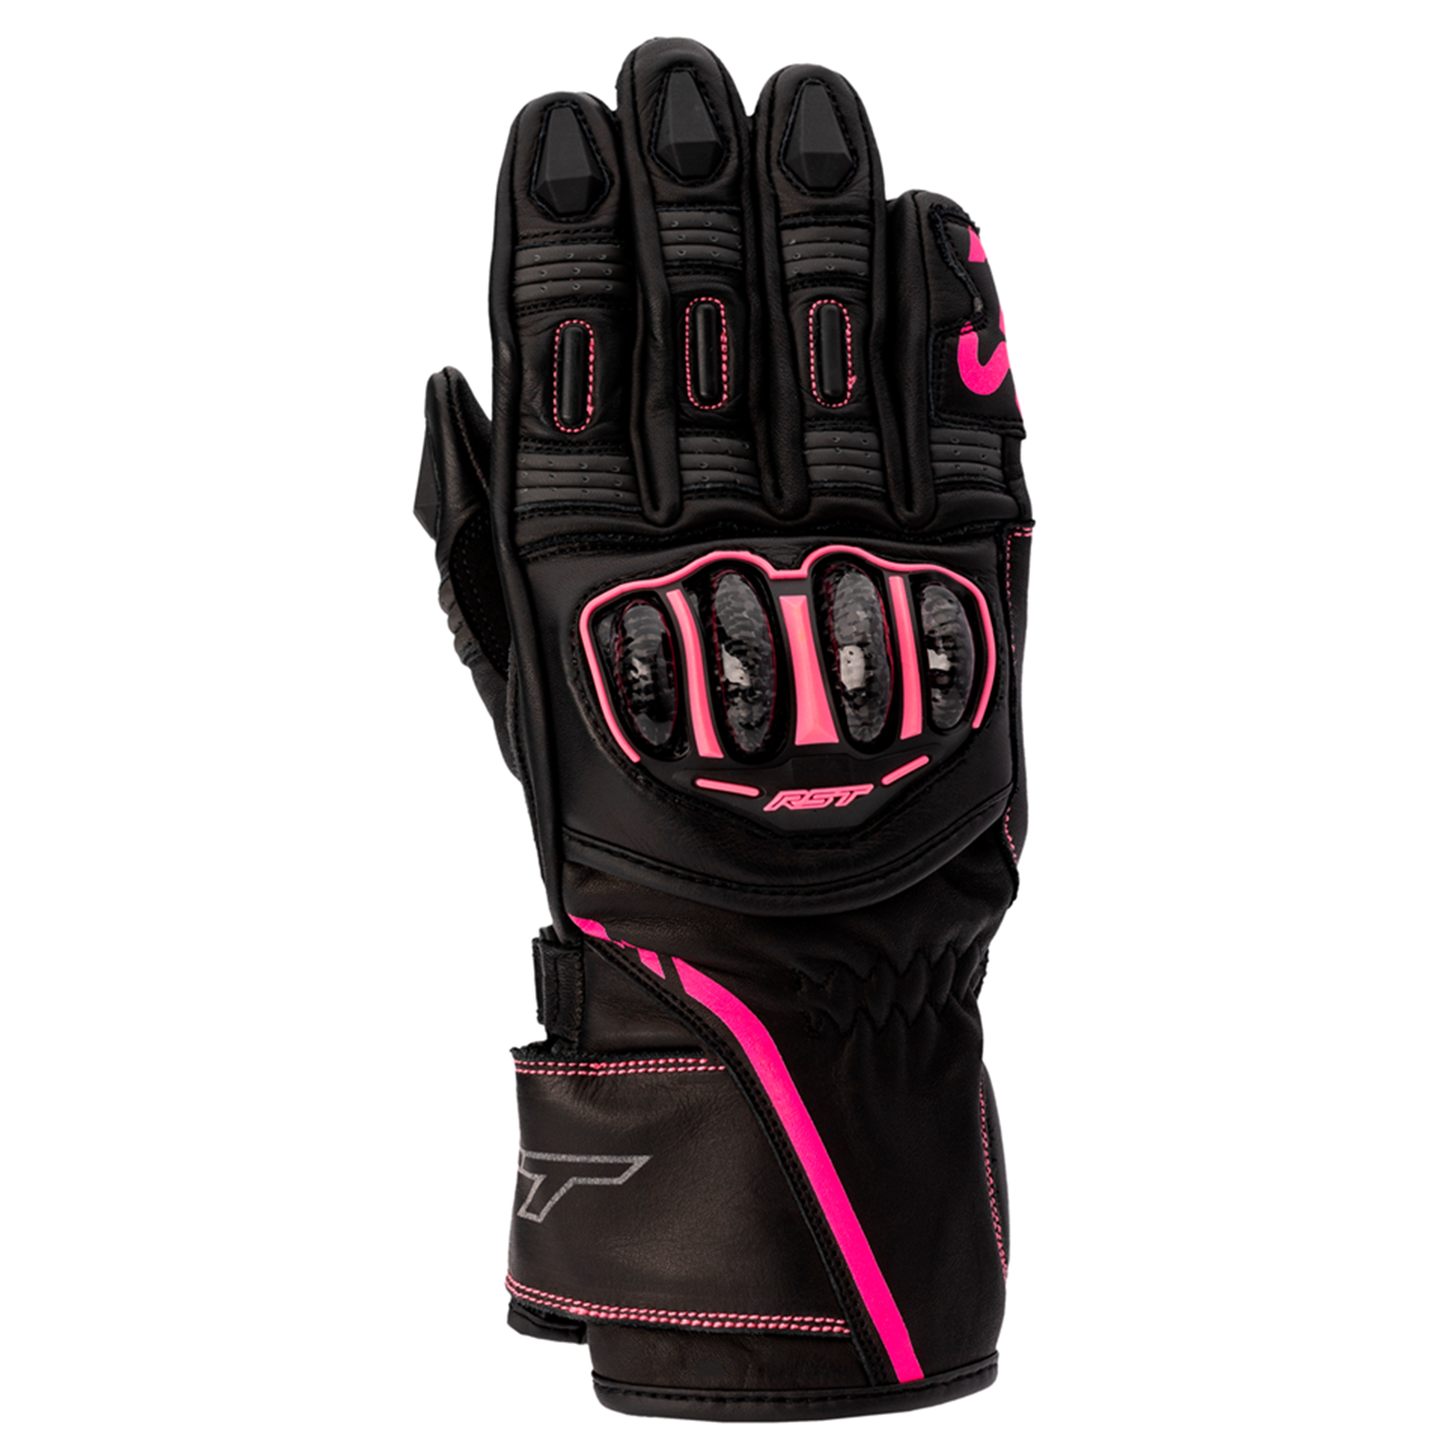 RST S1 CE Ladies Gloves - Black/Neon Pink (3060)